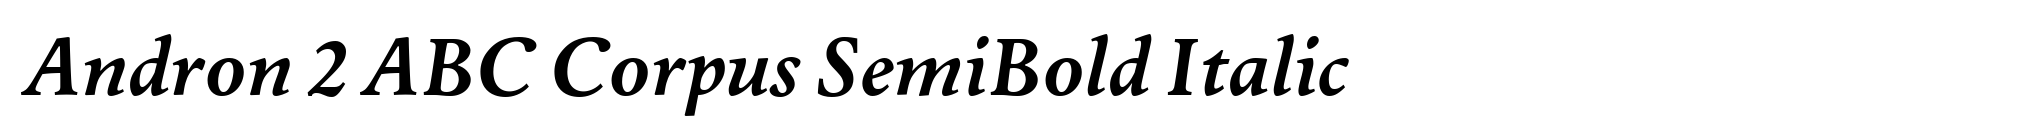 Andron 2 ABC Corpus SemiBold Italic image